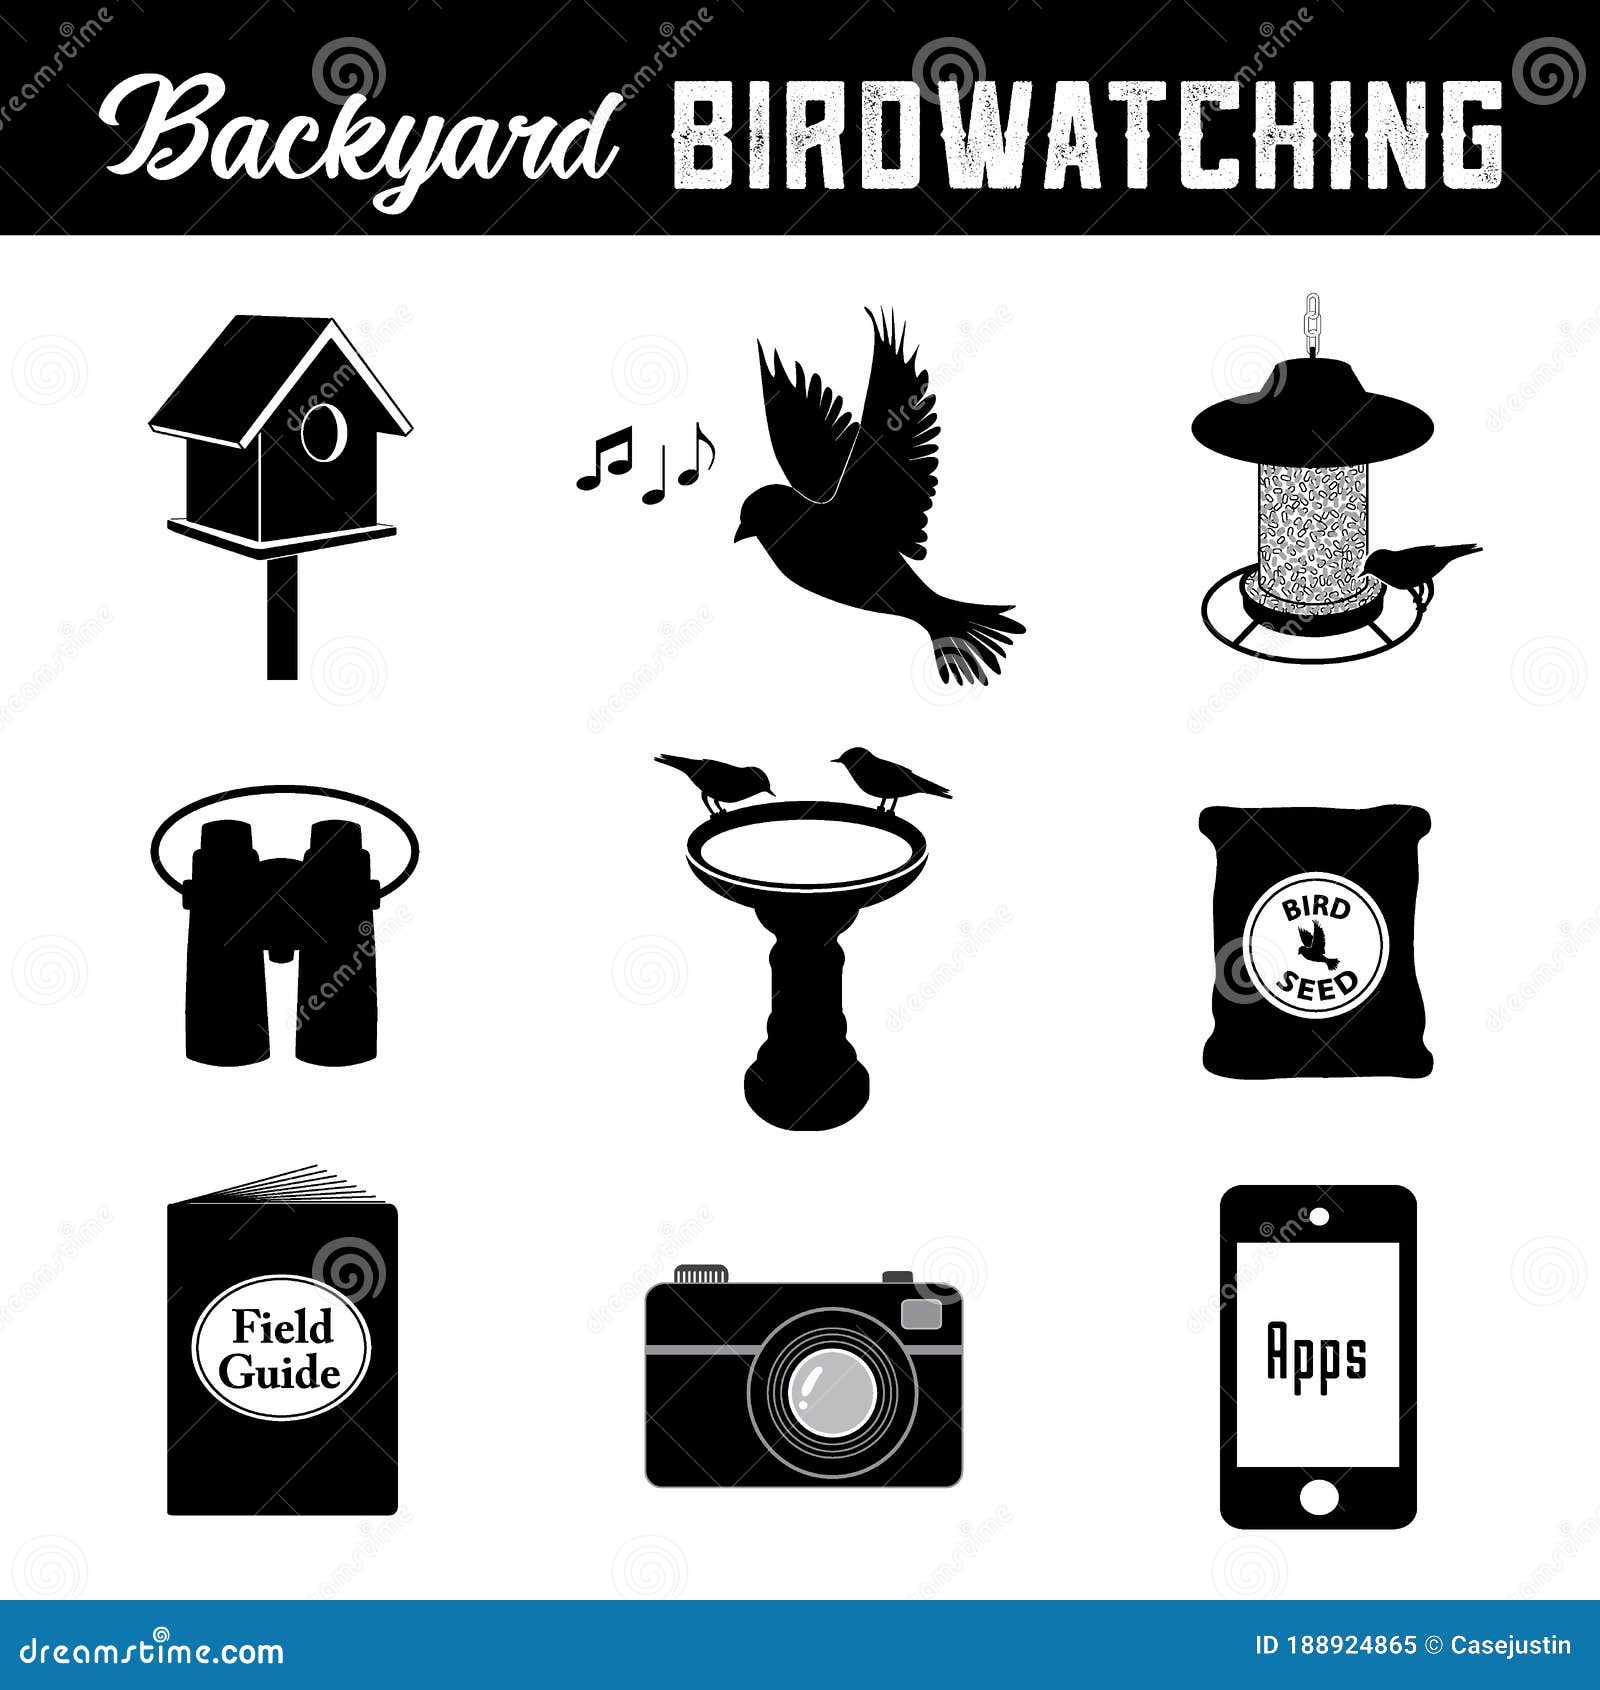 birdwatching, backyard gear and equipment for birders